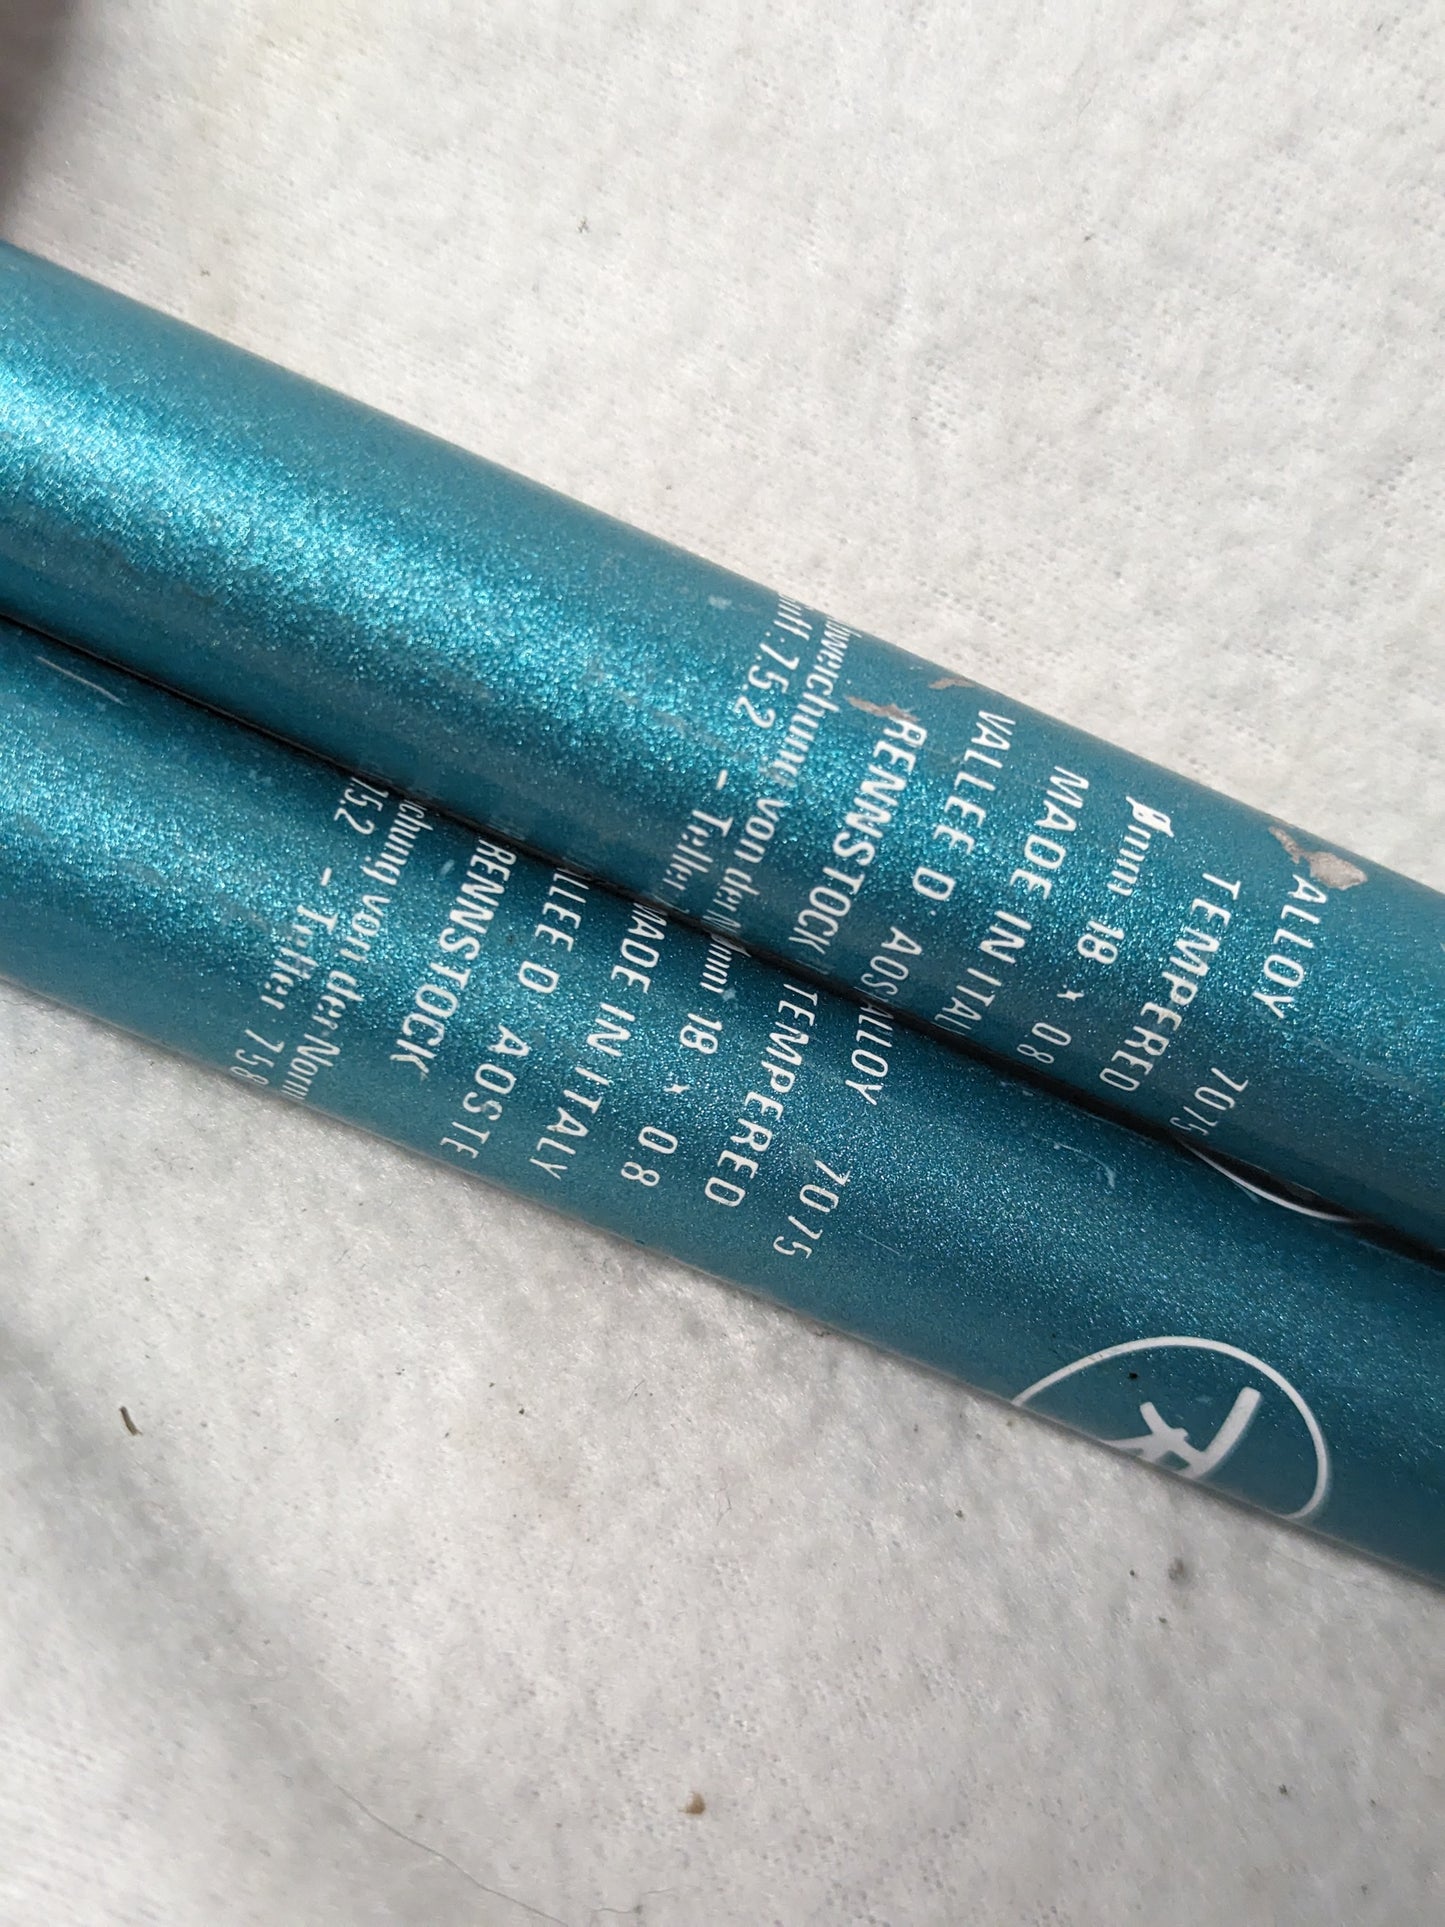 Rossignol Equipe Ski Poles Size 125 Cm Color Blue Condition Used